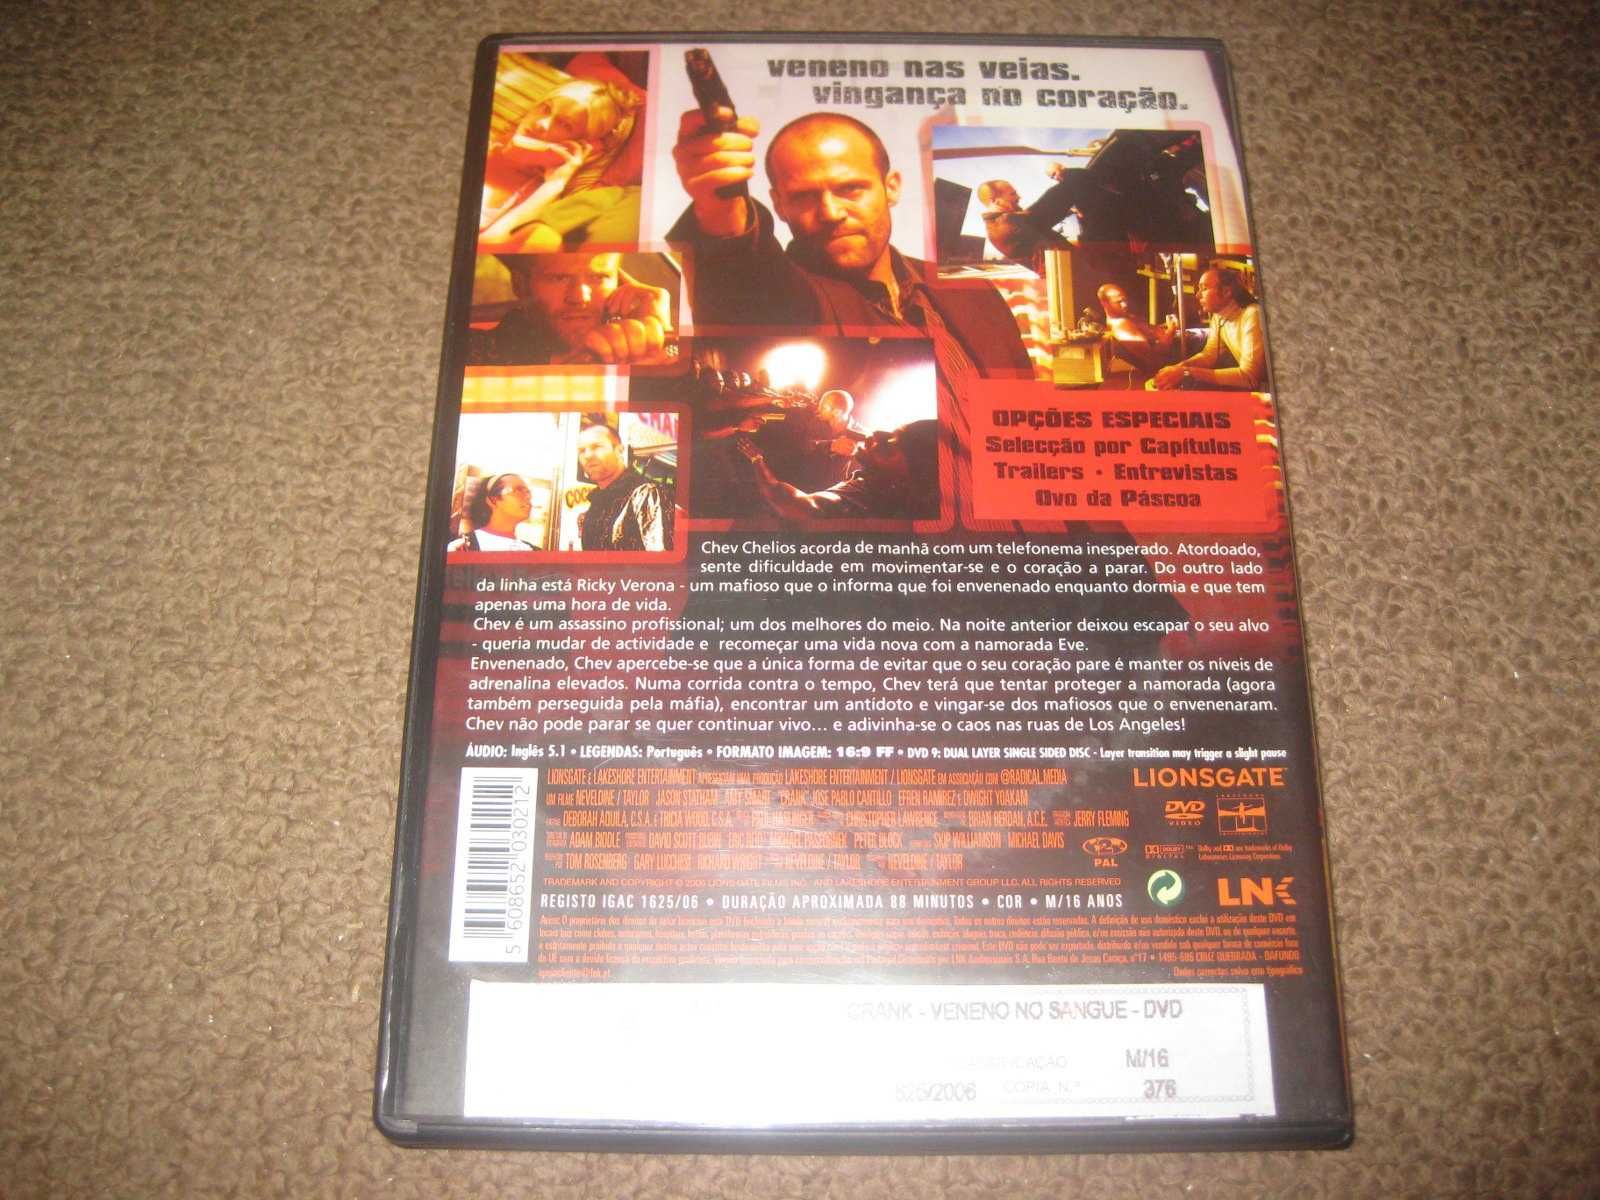 DVD "Crank - Veneno no Sangue" com Jason Statham